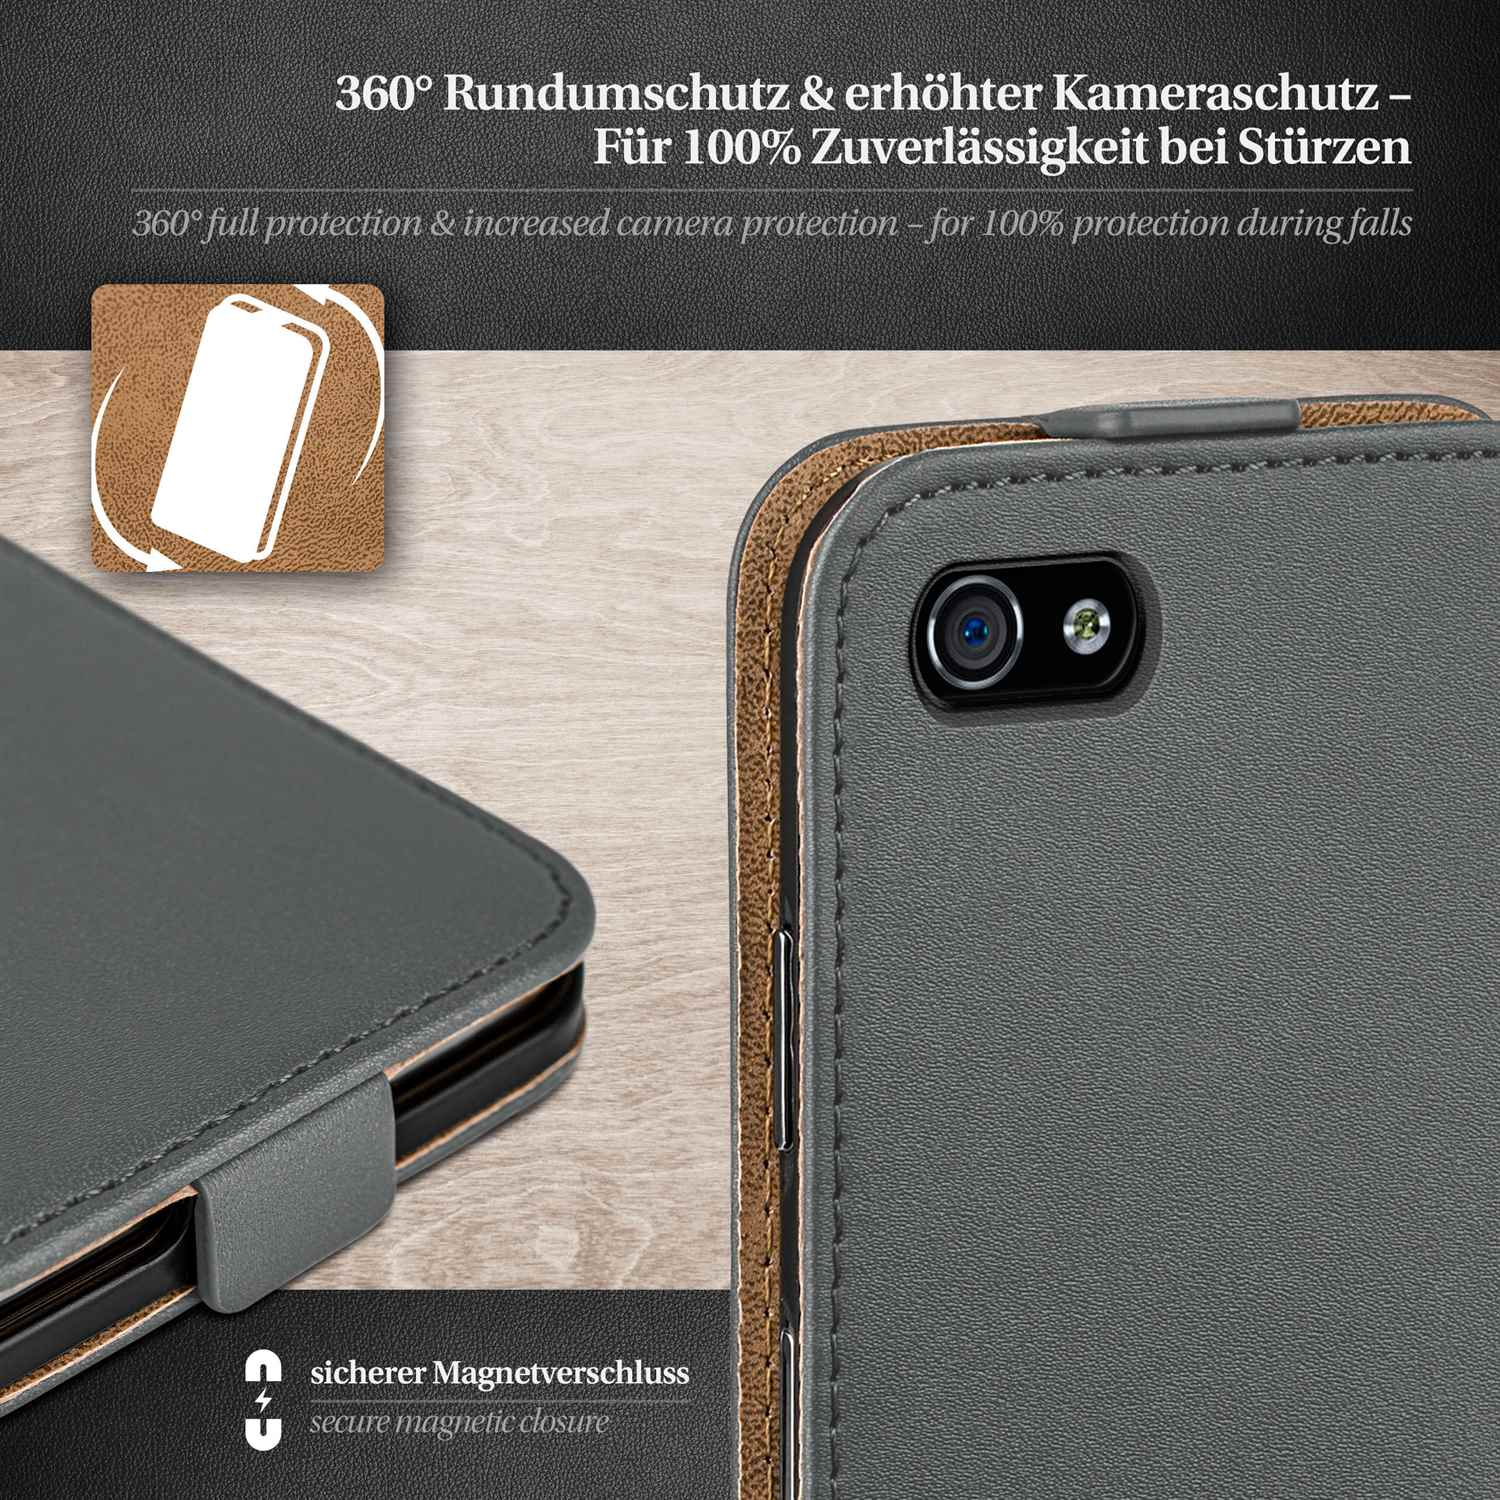 MOEX Flip Case, Cover, iPhone 4, Flip Anthracite-Gray Apple